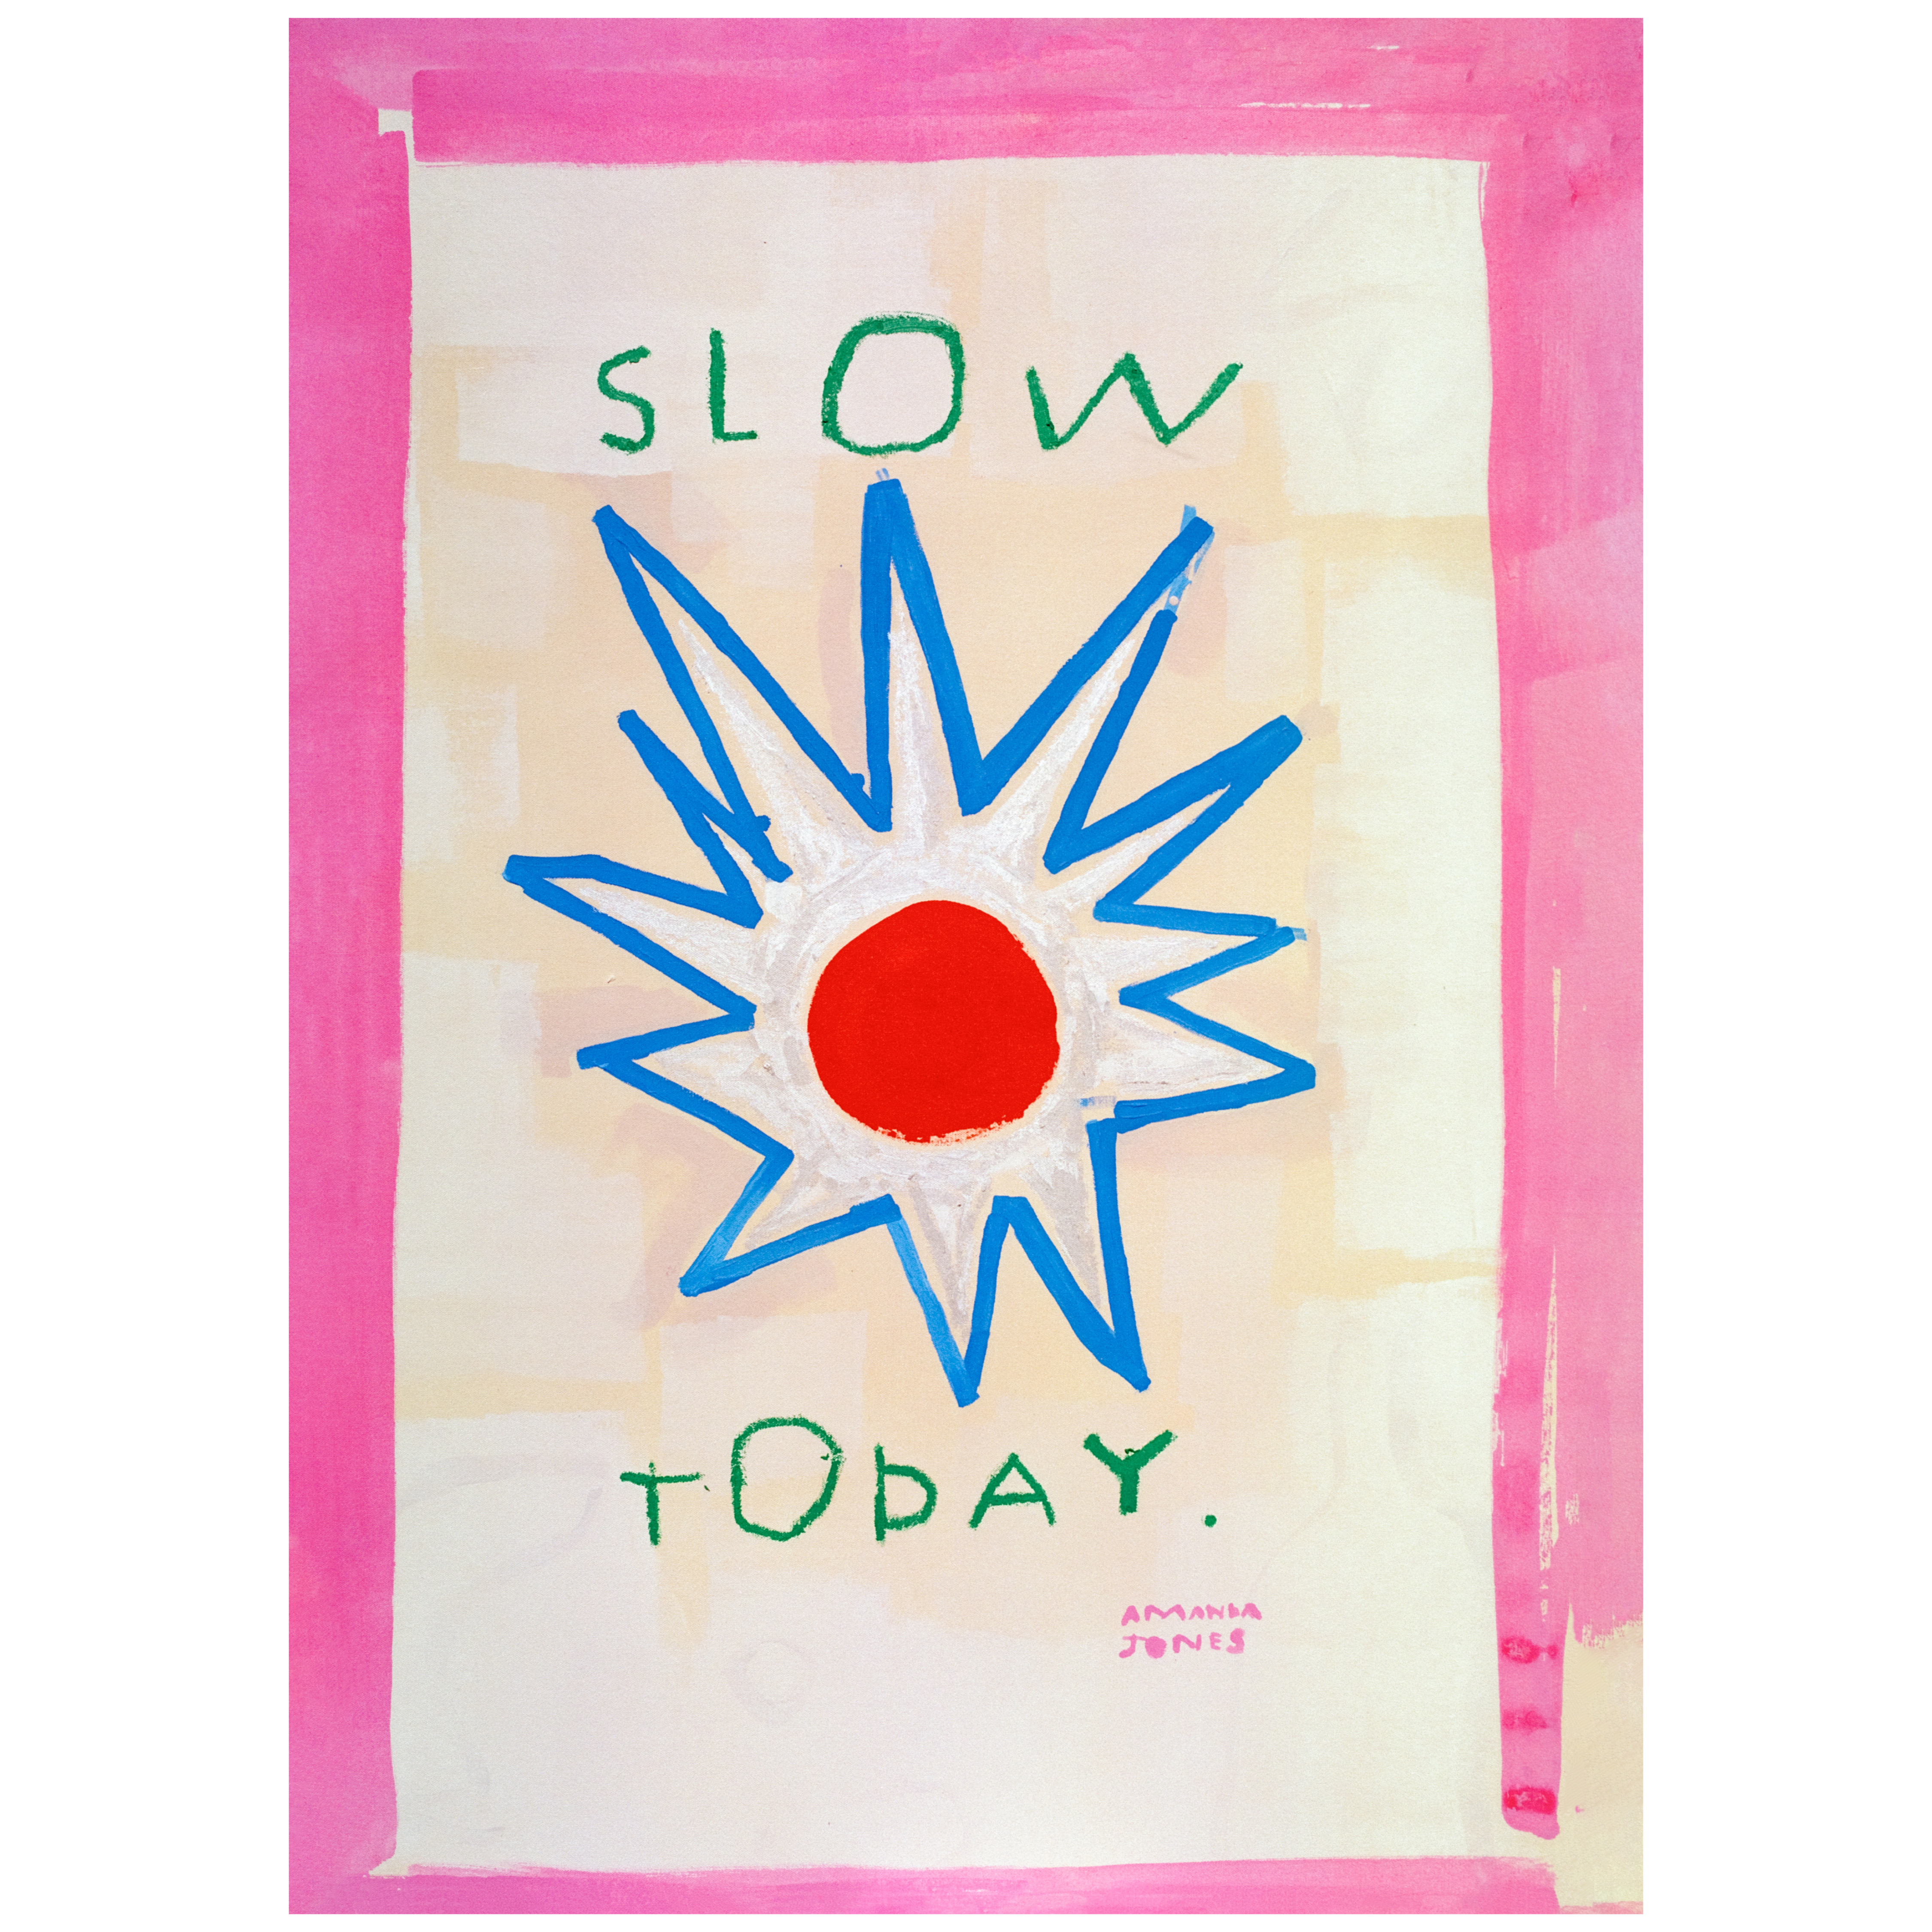 'Slow today'